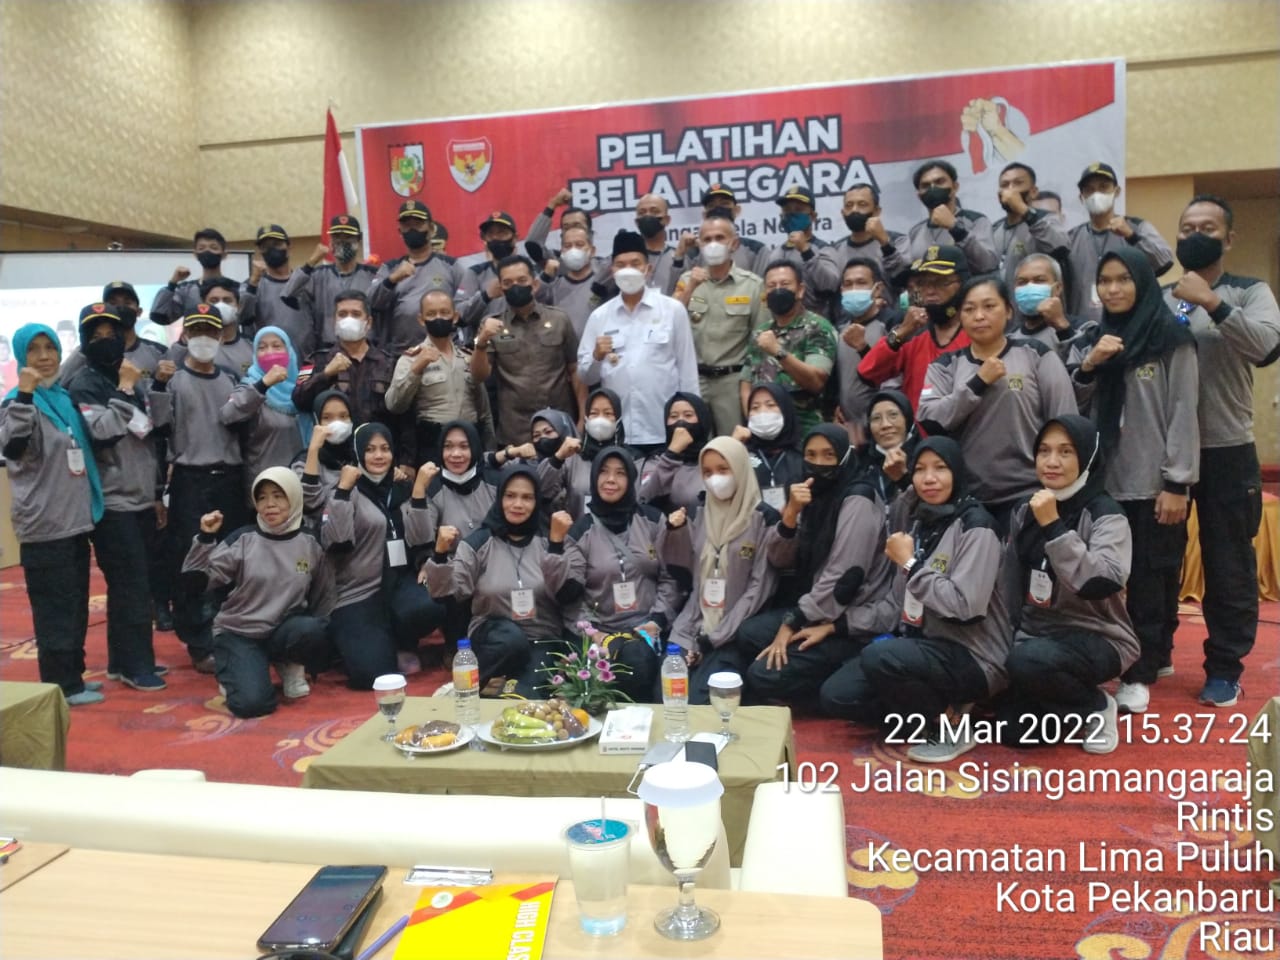 Acara Pelatihan Bela Negara KBPP Polri Tahun 2022, resmi dibuka oleh Bapak Walikota Pekanbaru